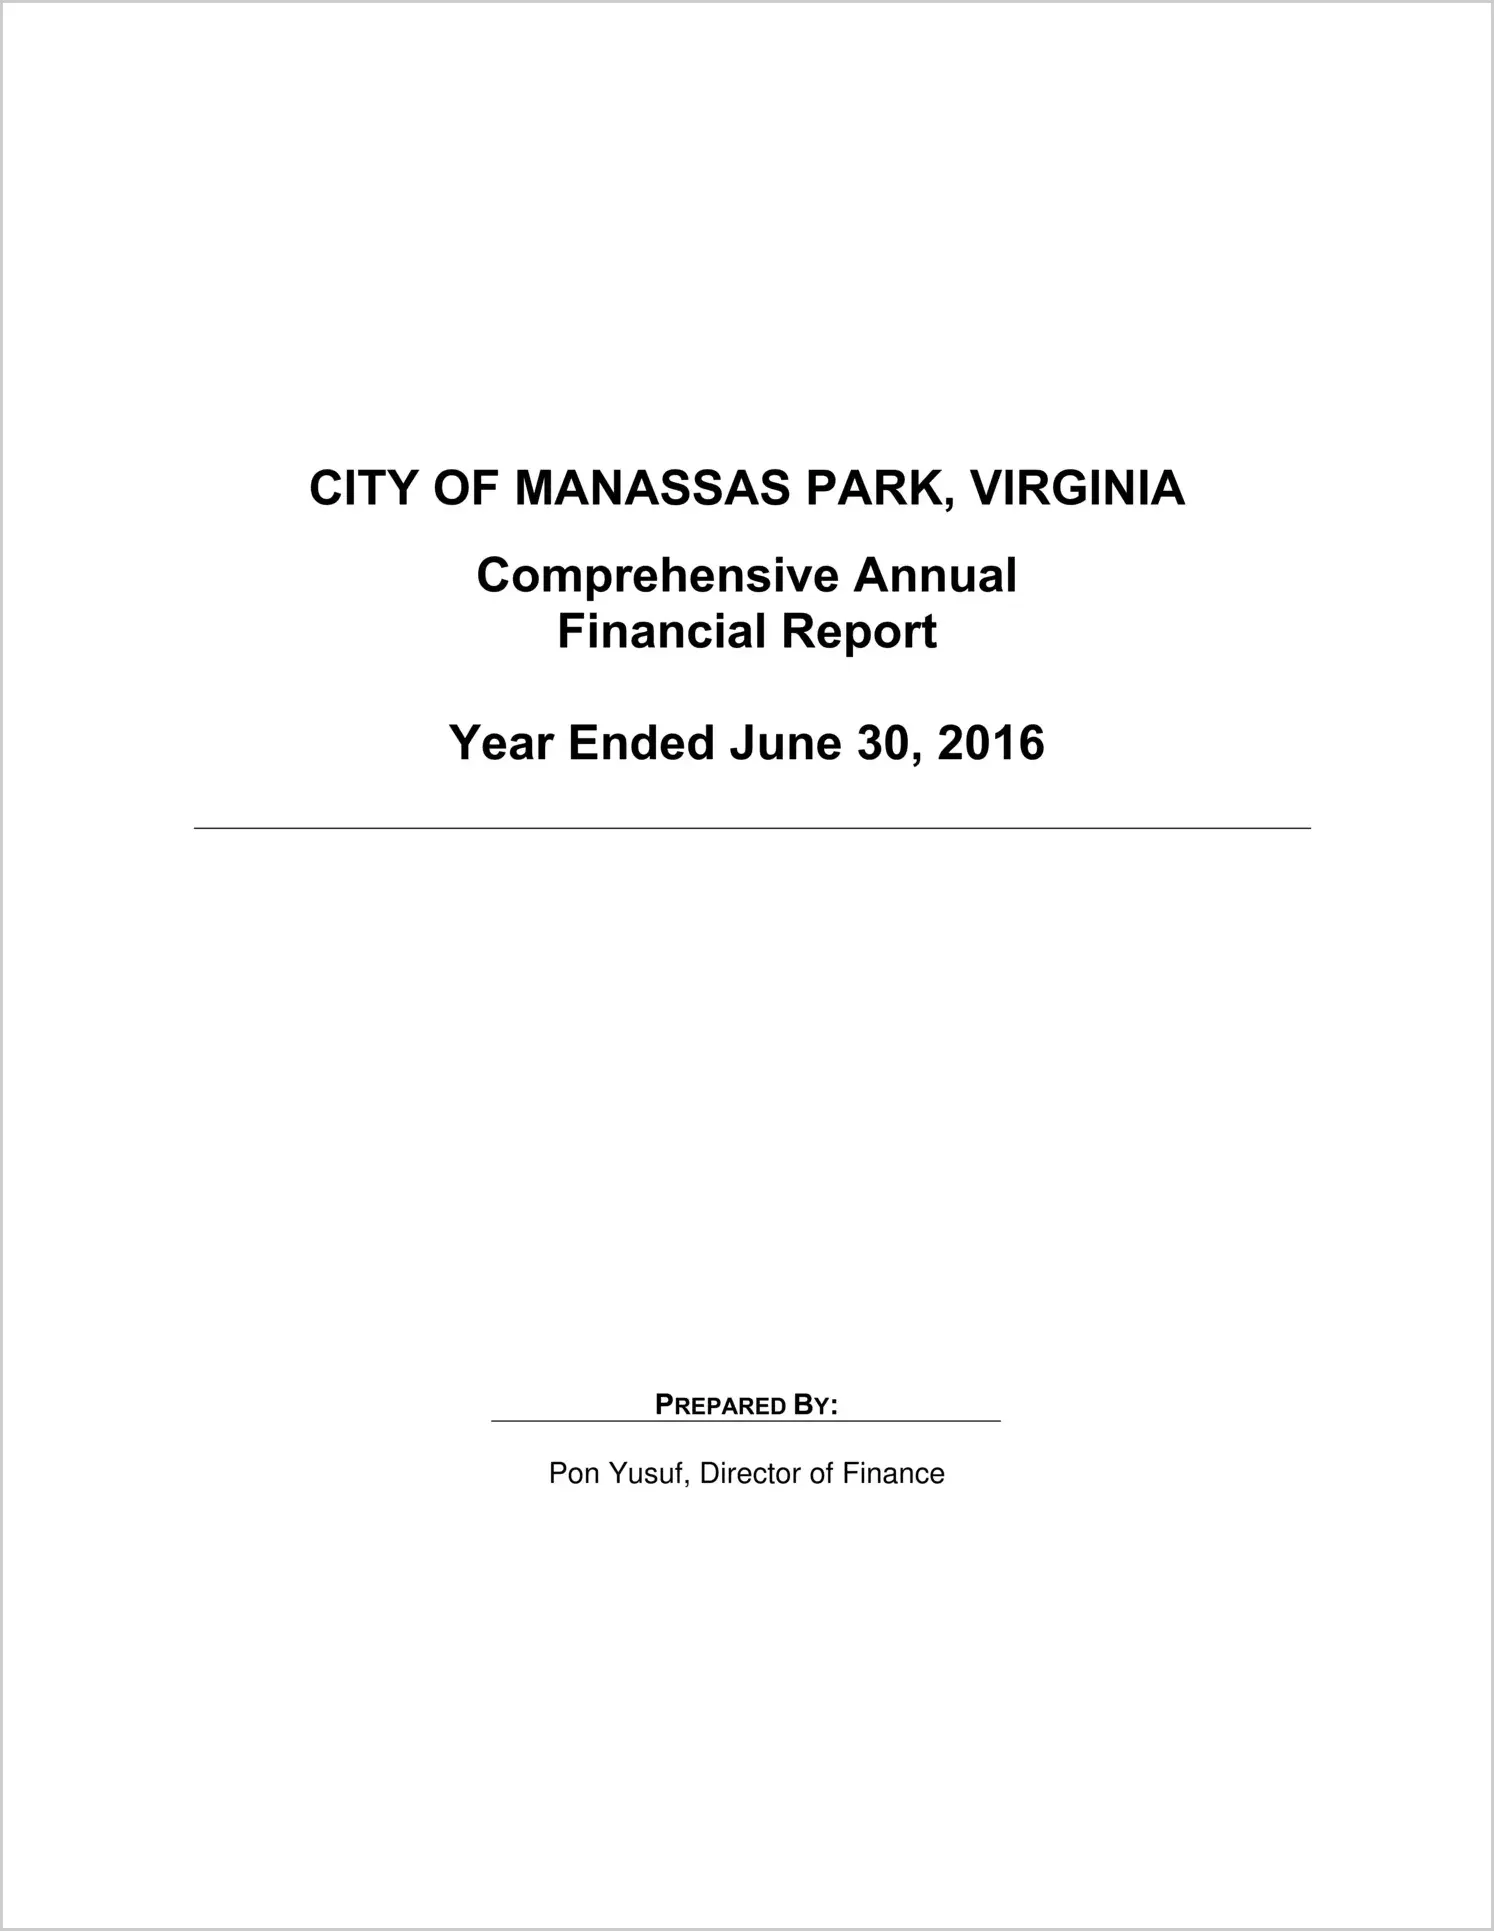 2016 Annual Financial Report for City of Manassas Park